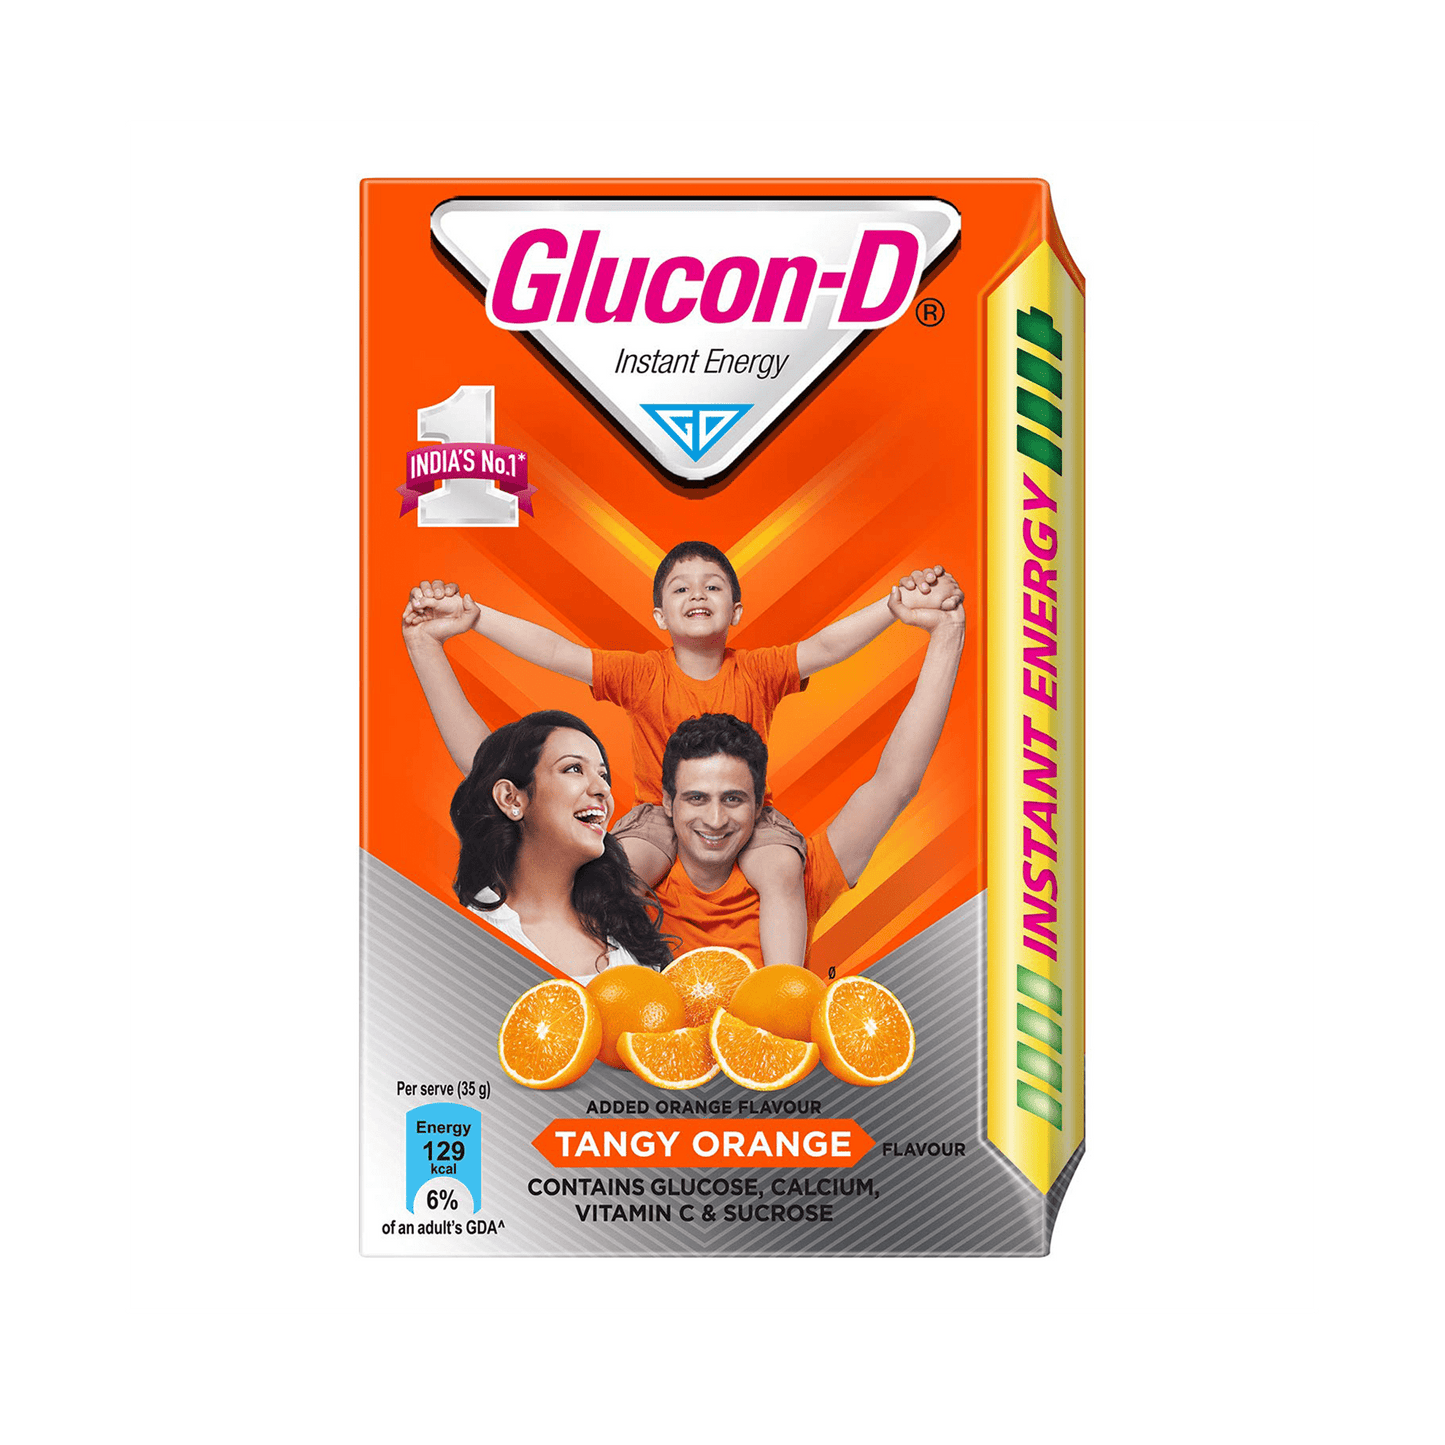 Glucon D Instant Energy Health Drink - Tangy Orange.